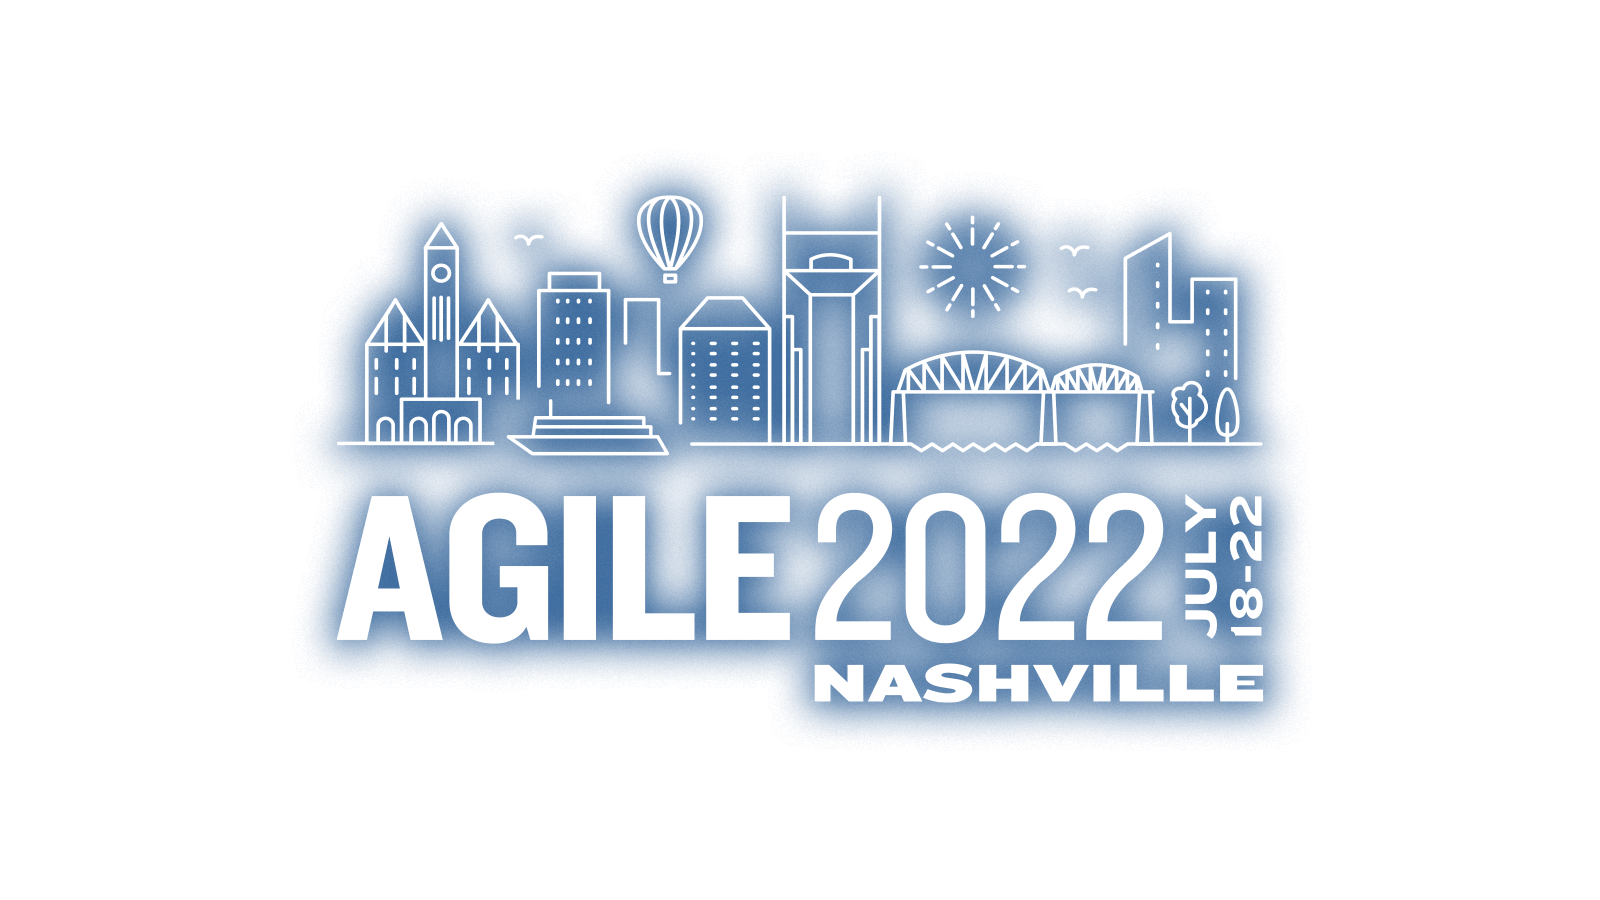 Agile2022 Nashville